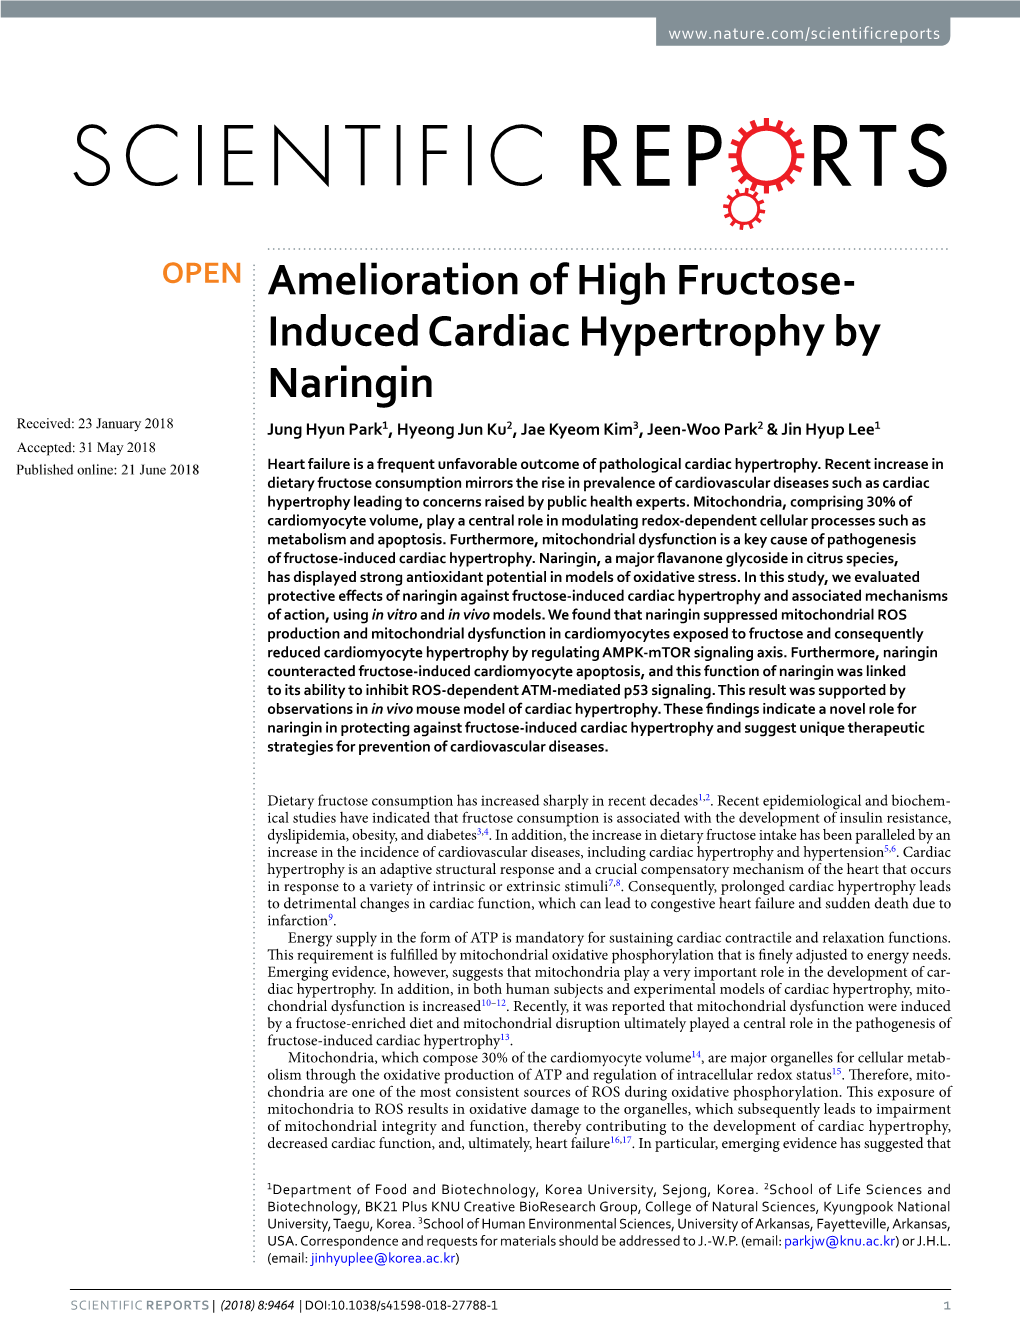 Induced Cardiac Hypertrophy by Naringin